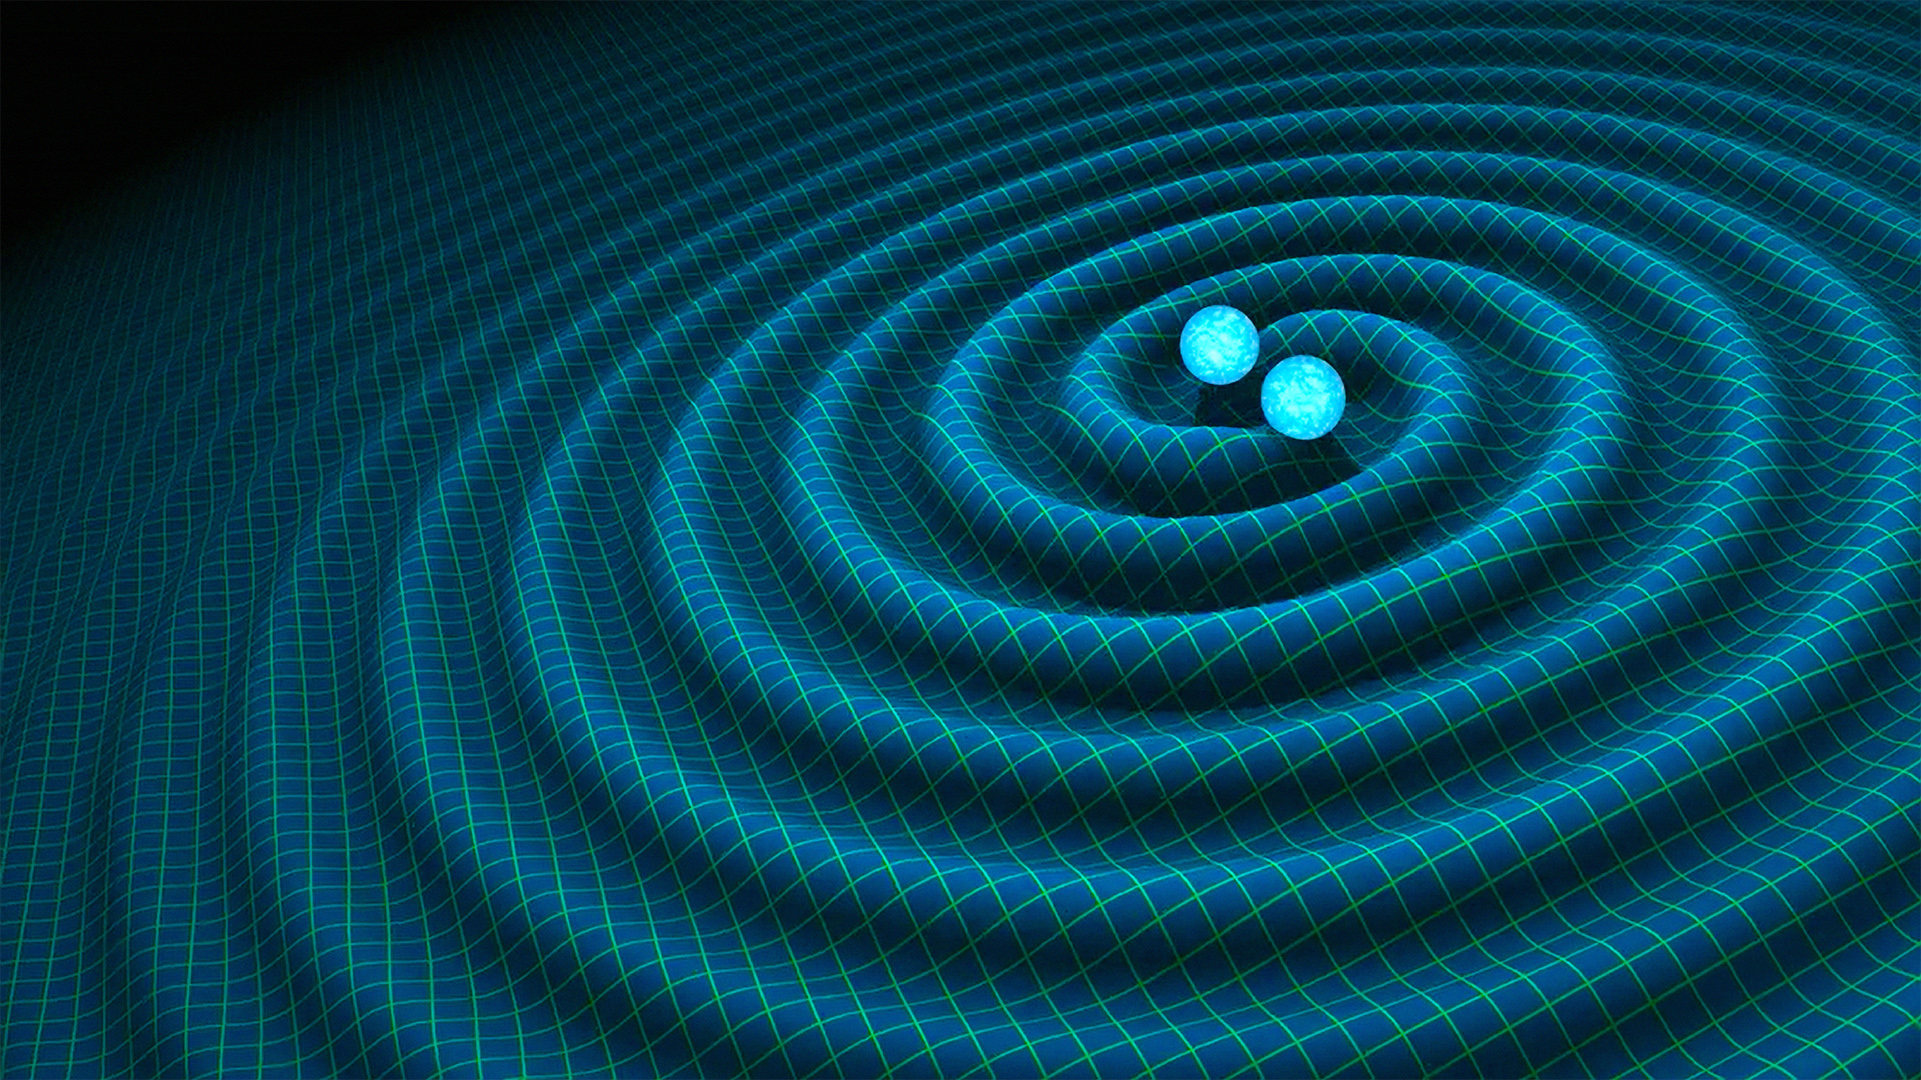 Gravitational wave detectors start next observing run to explore the secrets of the Universe